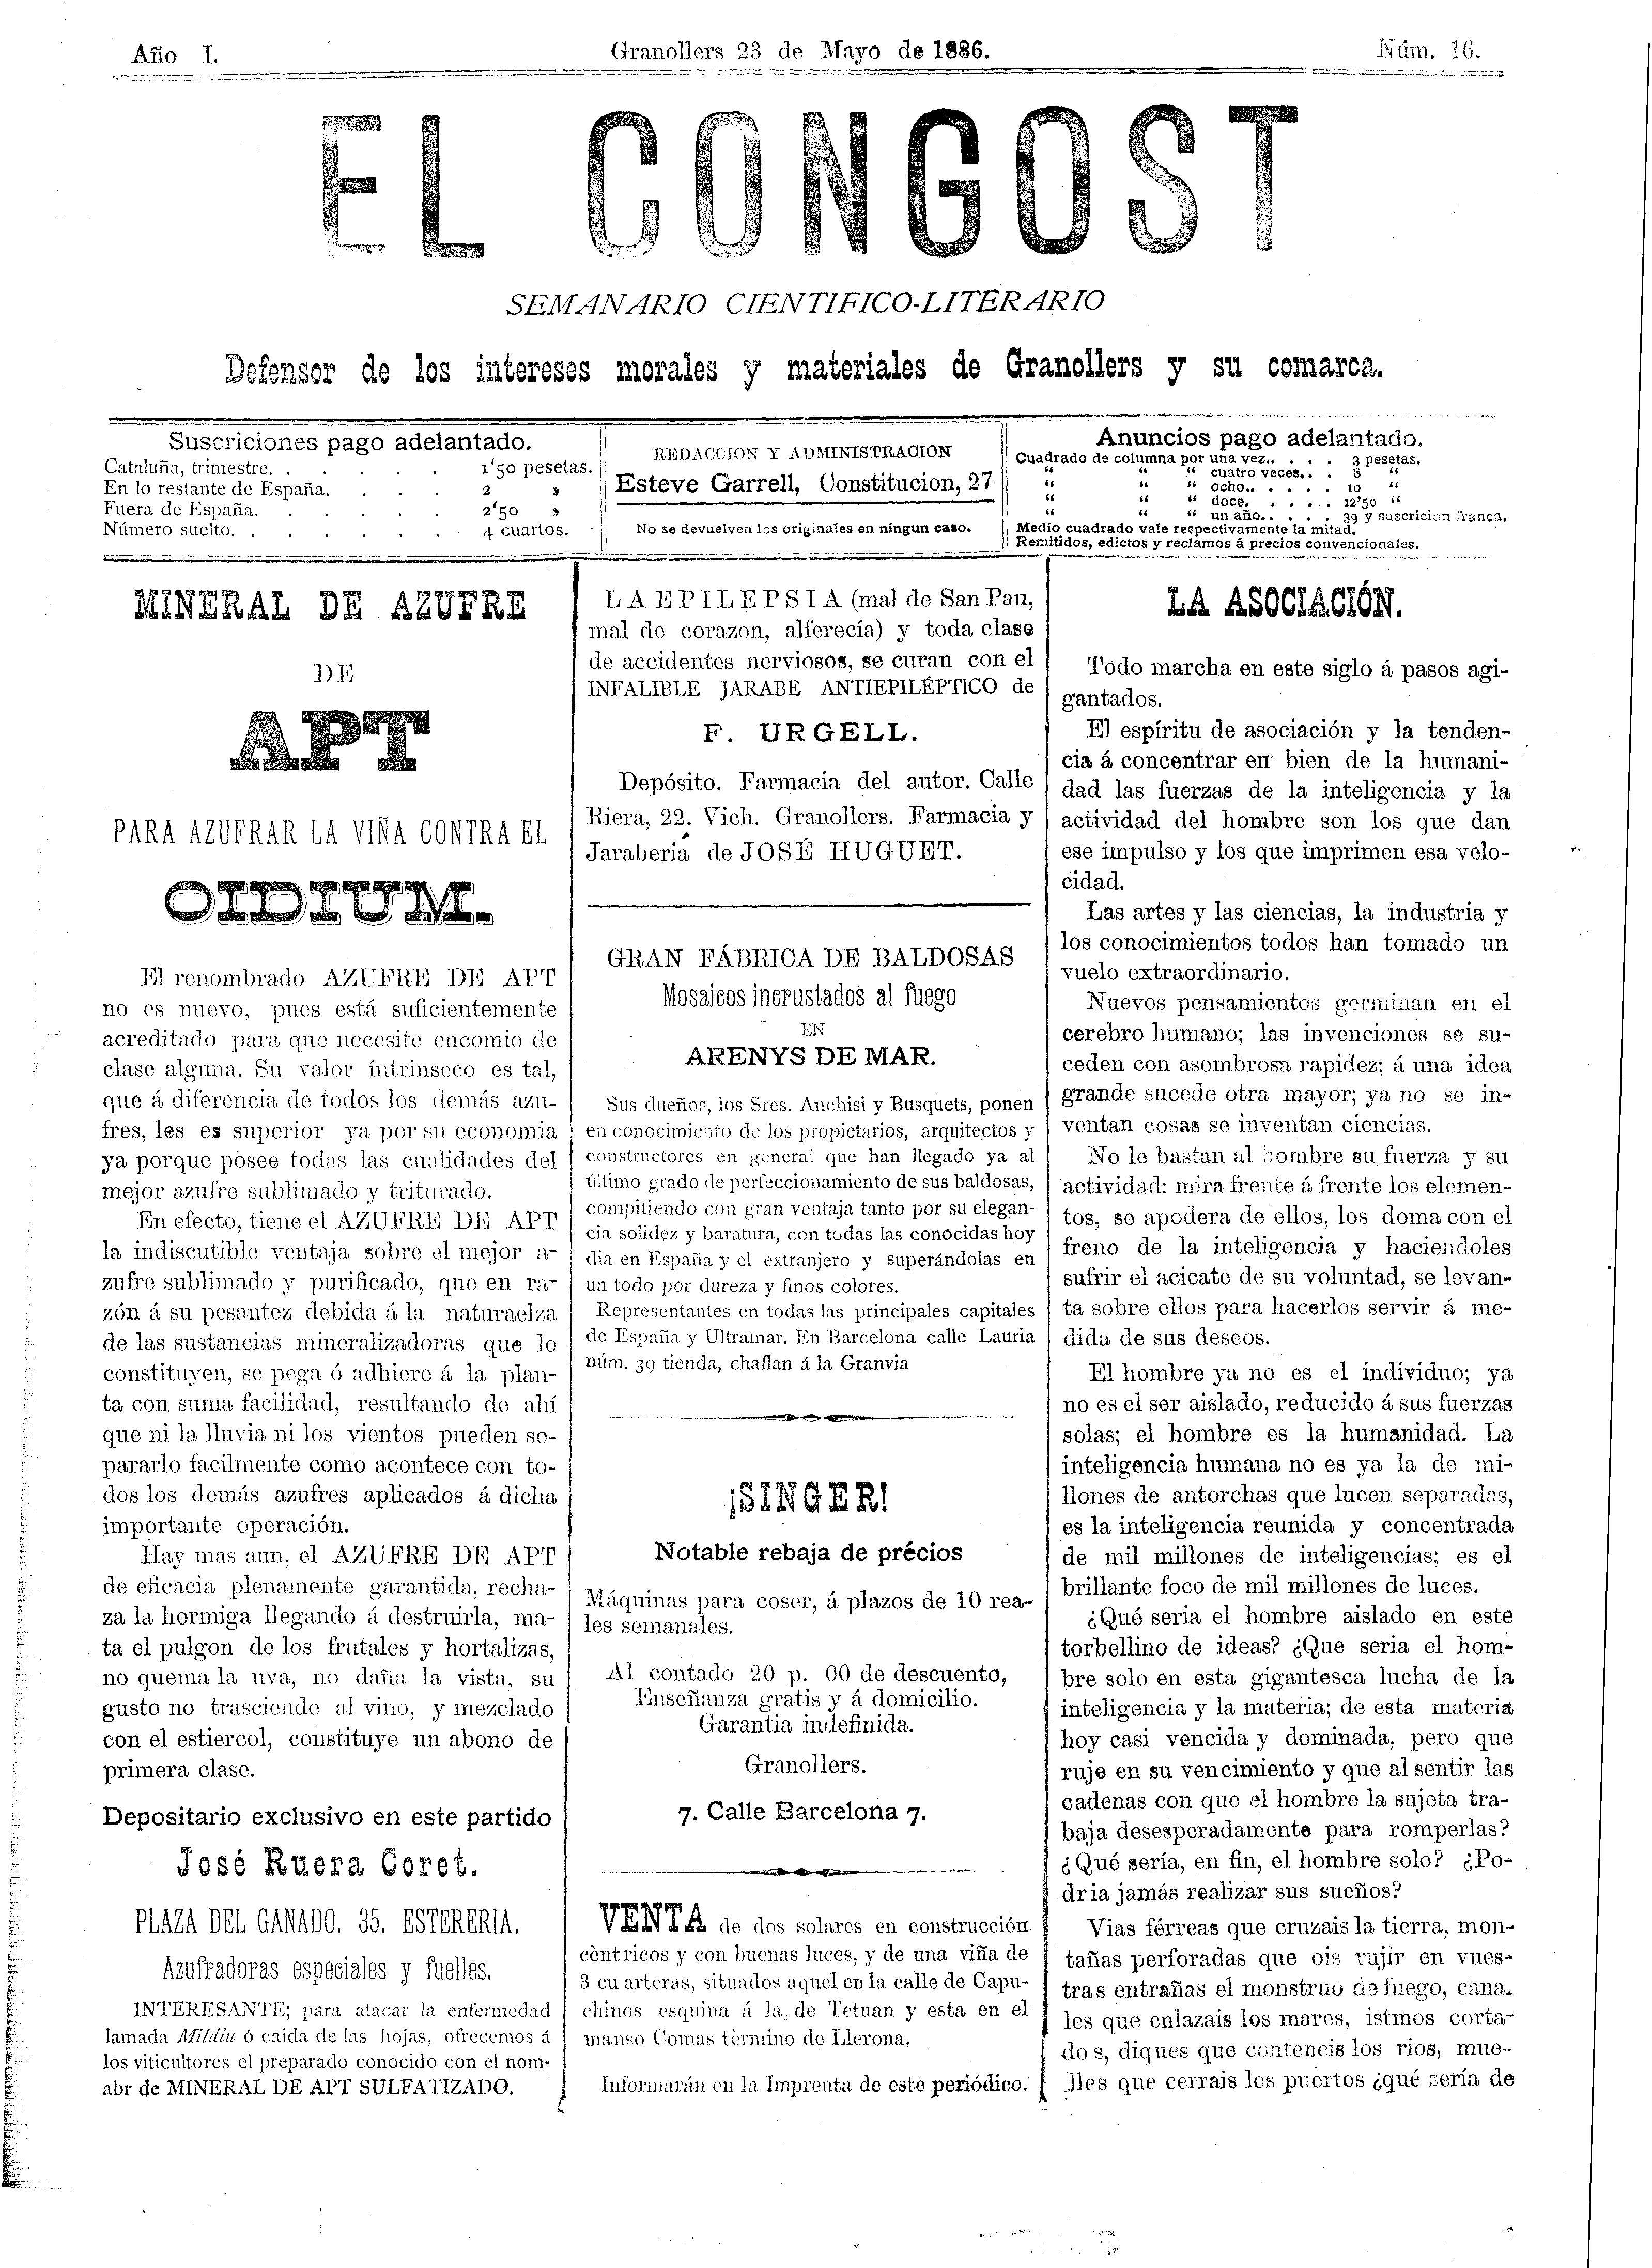 El Congost, 23/5/1886 [Exemplar]